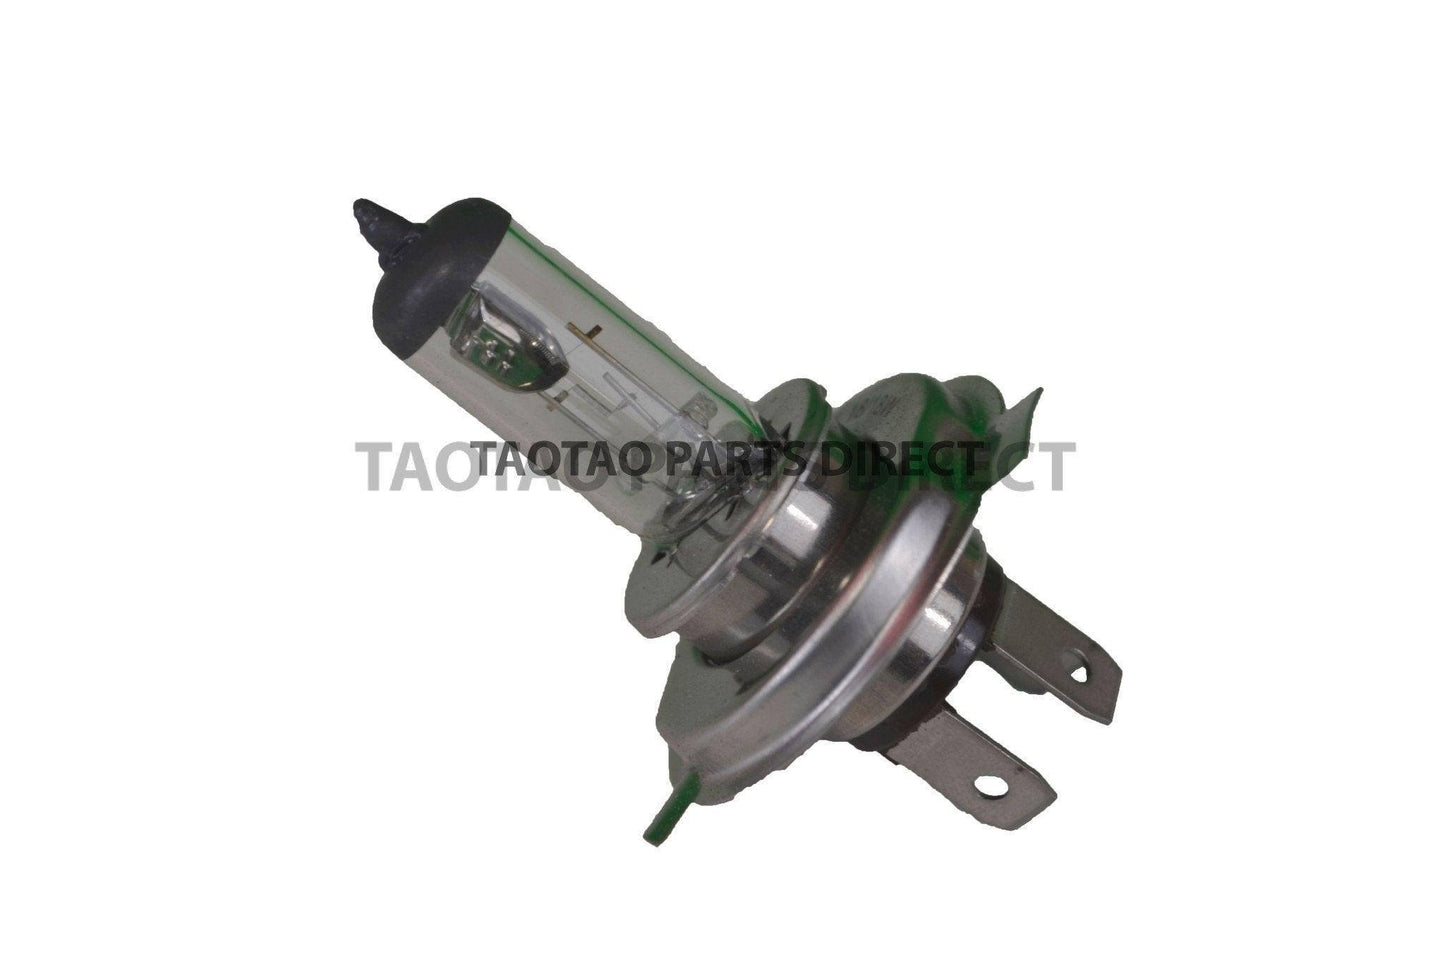 #1 Headlight Bulb - TaoTao Parts Direct